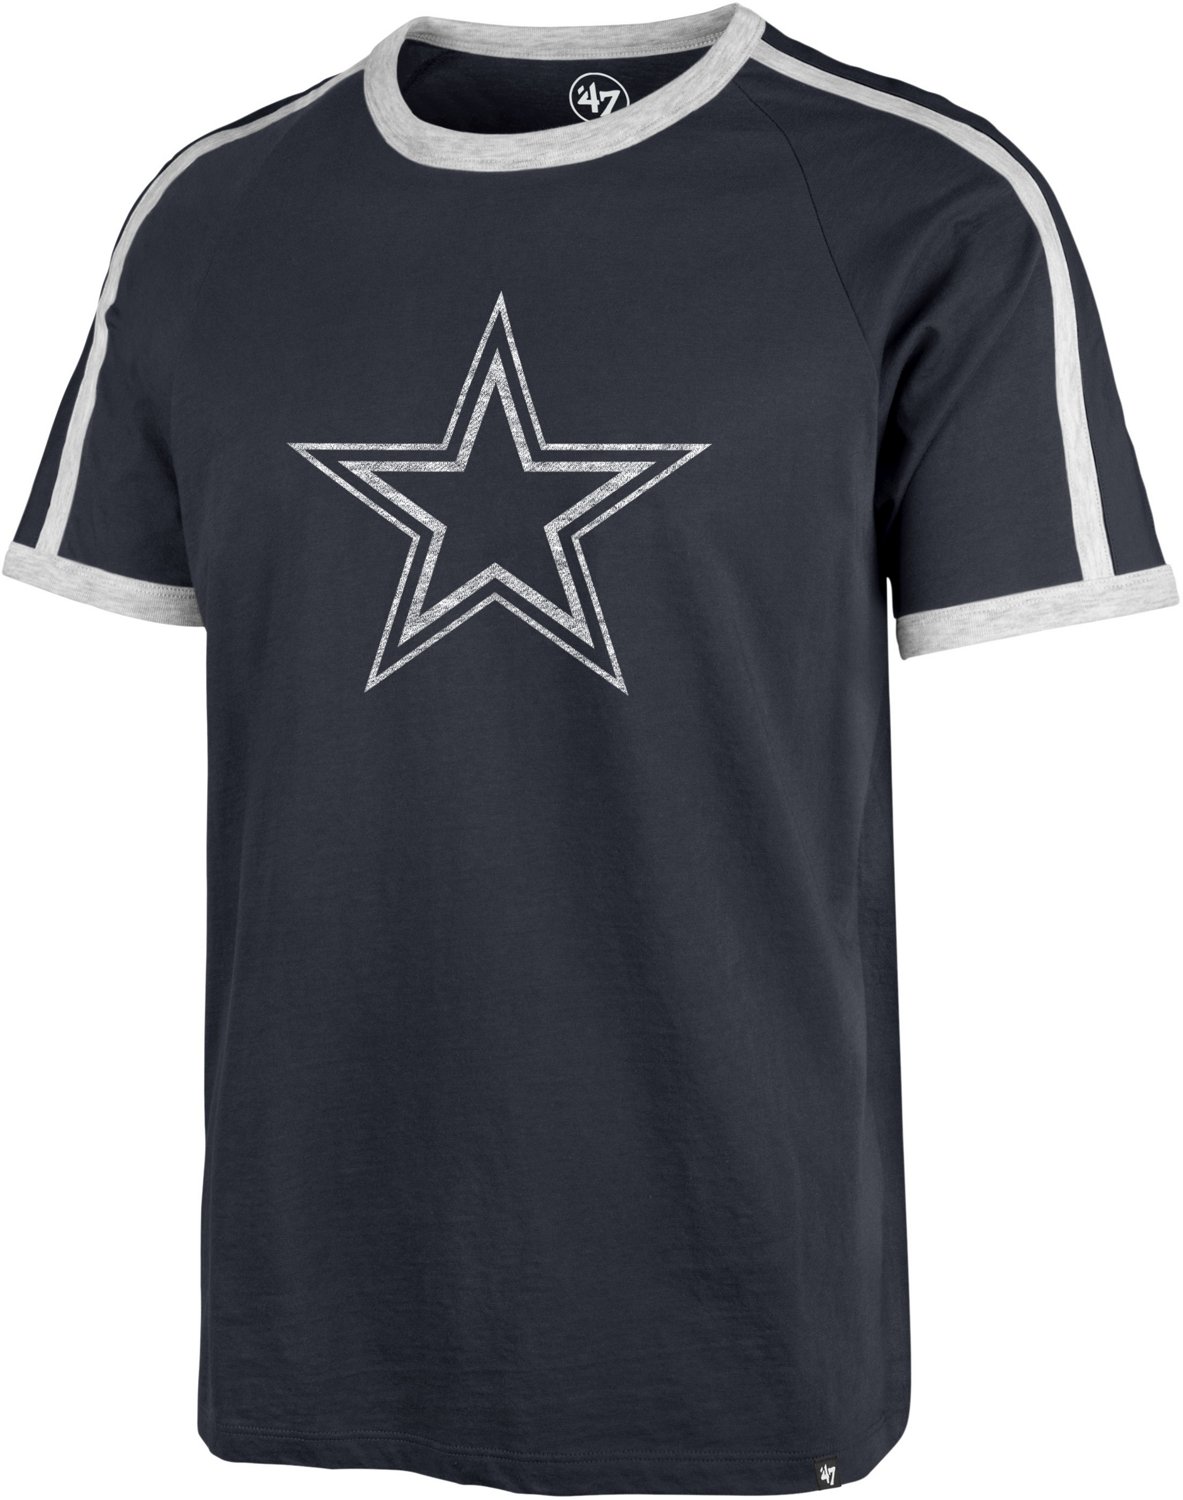 preorder) Dallas Cowboys Dress and Cardigan